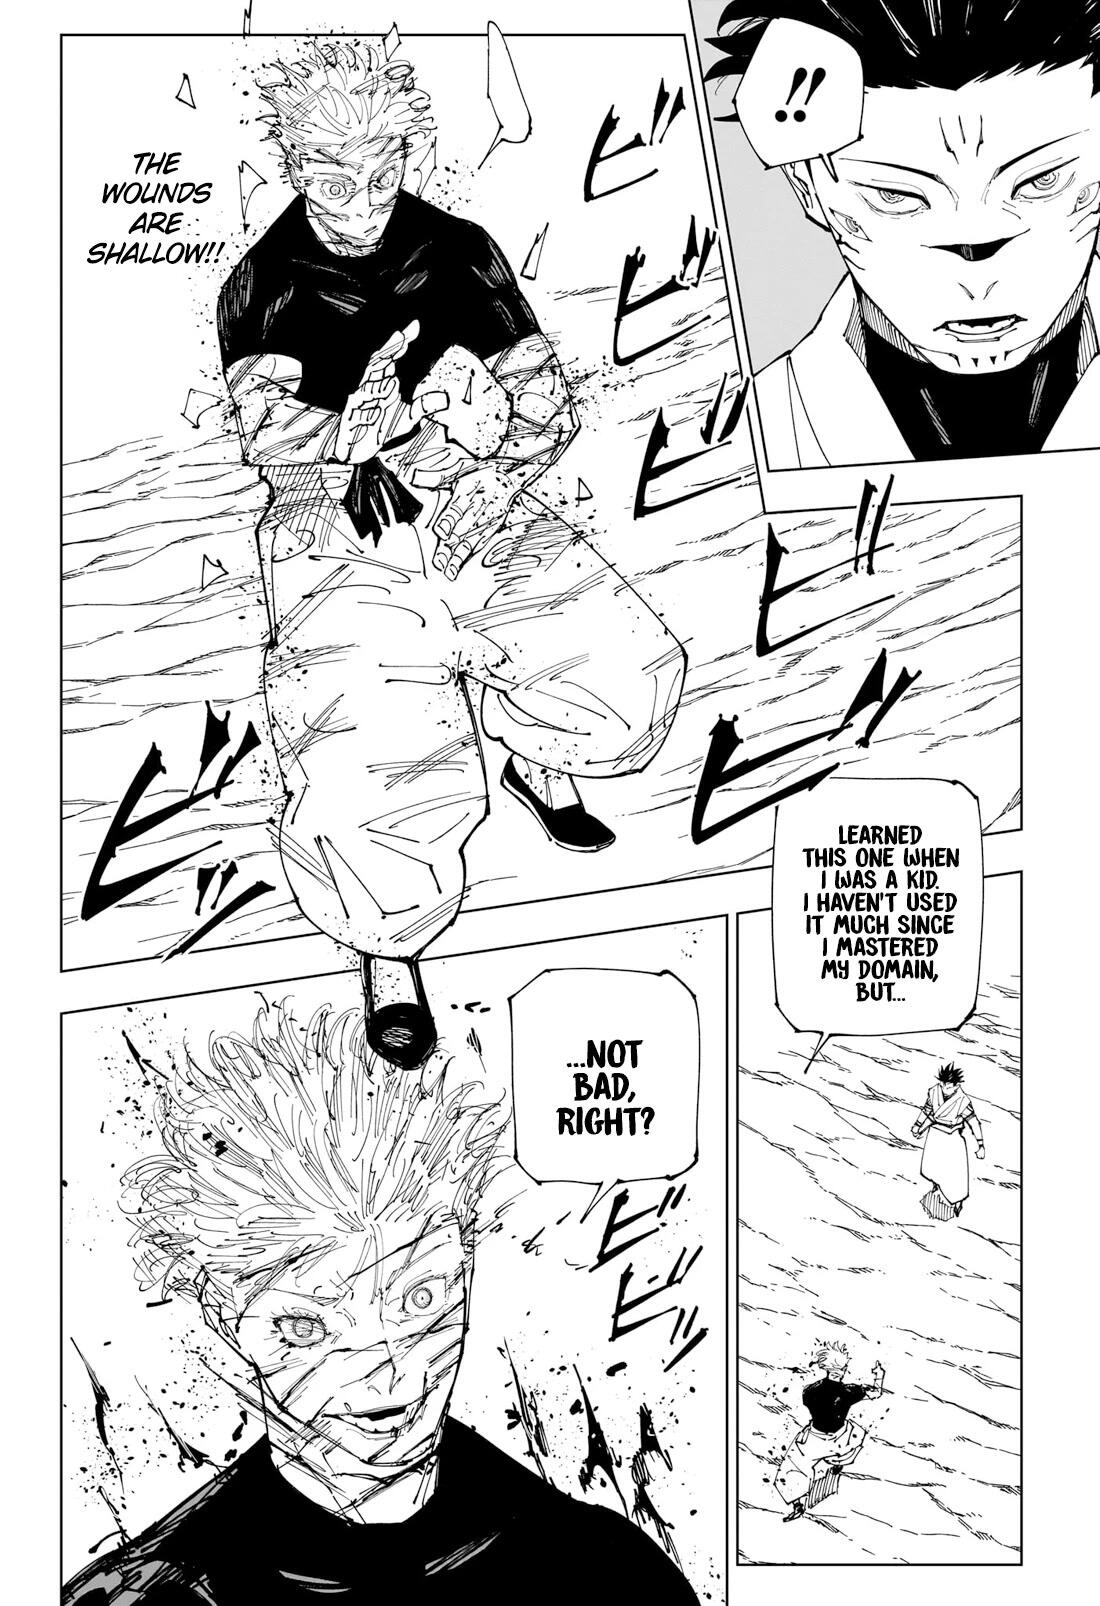 Jujutsu Kaisen Chapter 227: The Decisive Battle In The Uninhabited, Demon-Infested Shinjuku ⑤ page 17 - Mangakakalot